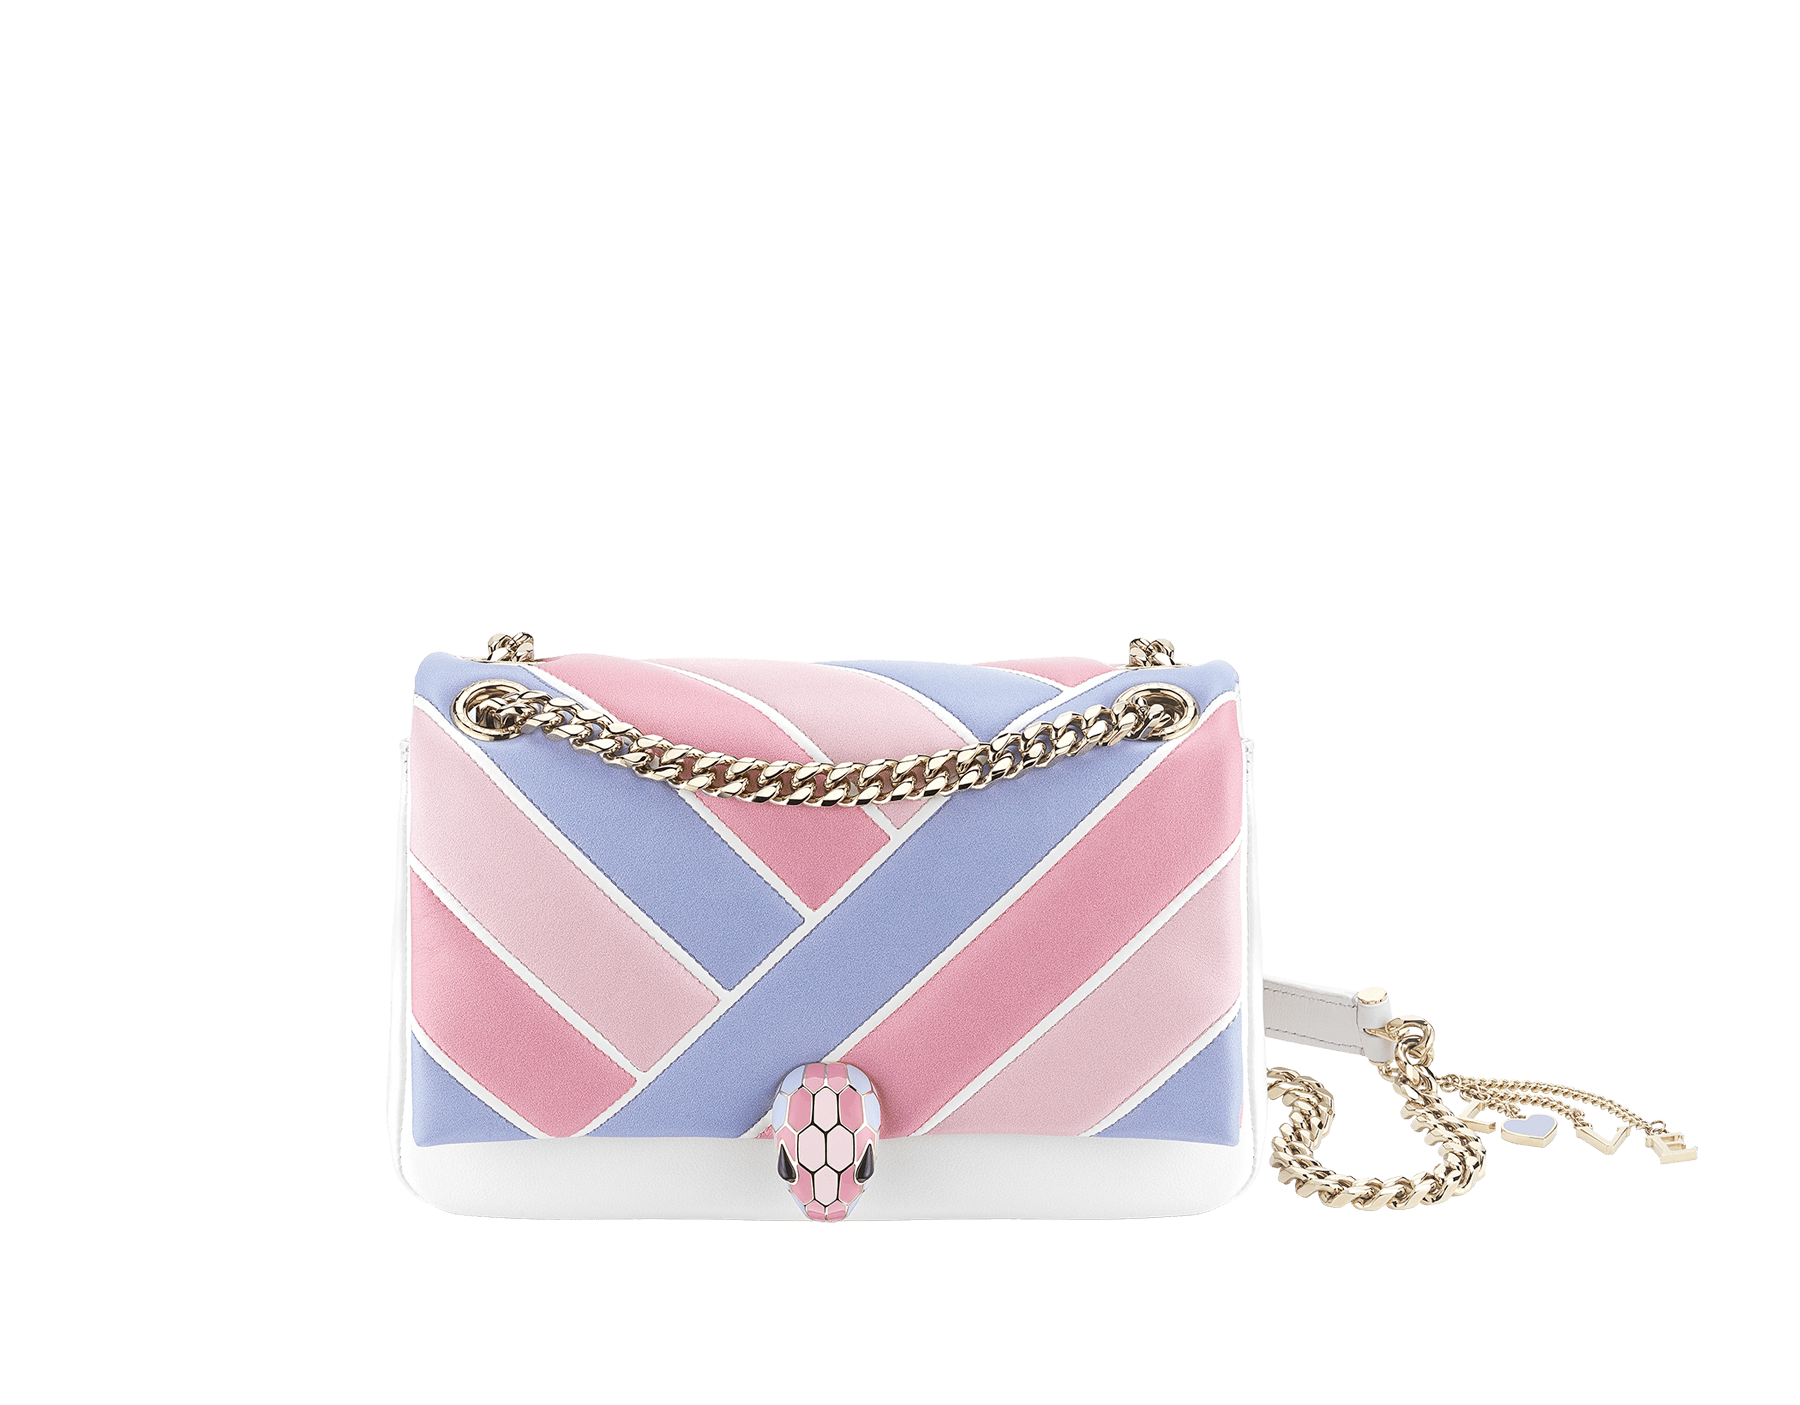 bvlgari official website handbags